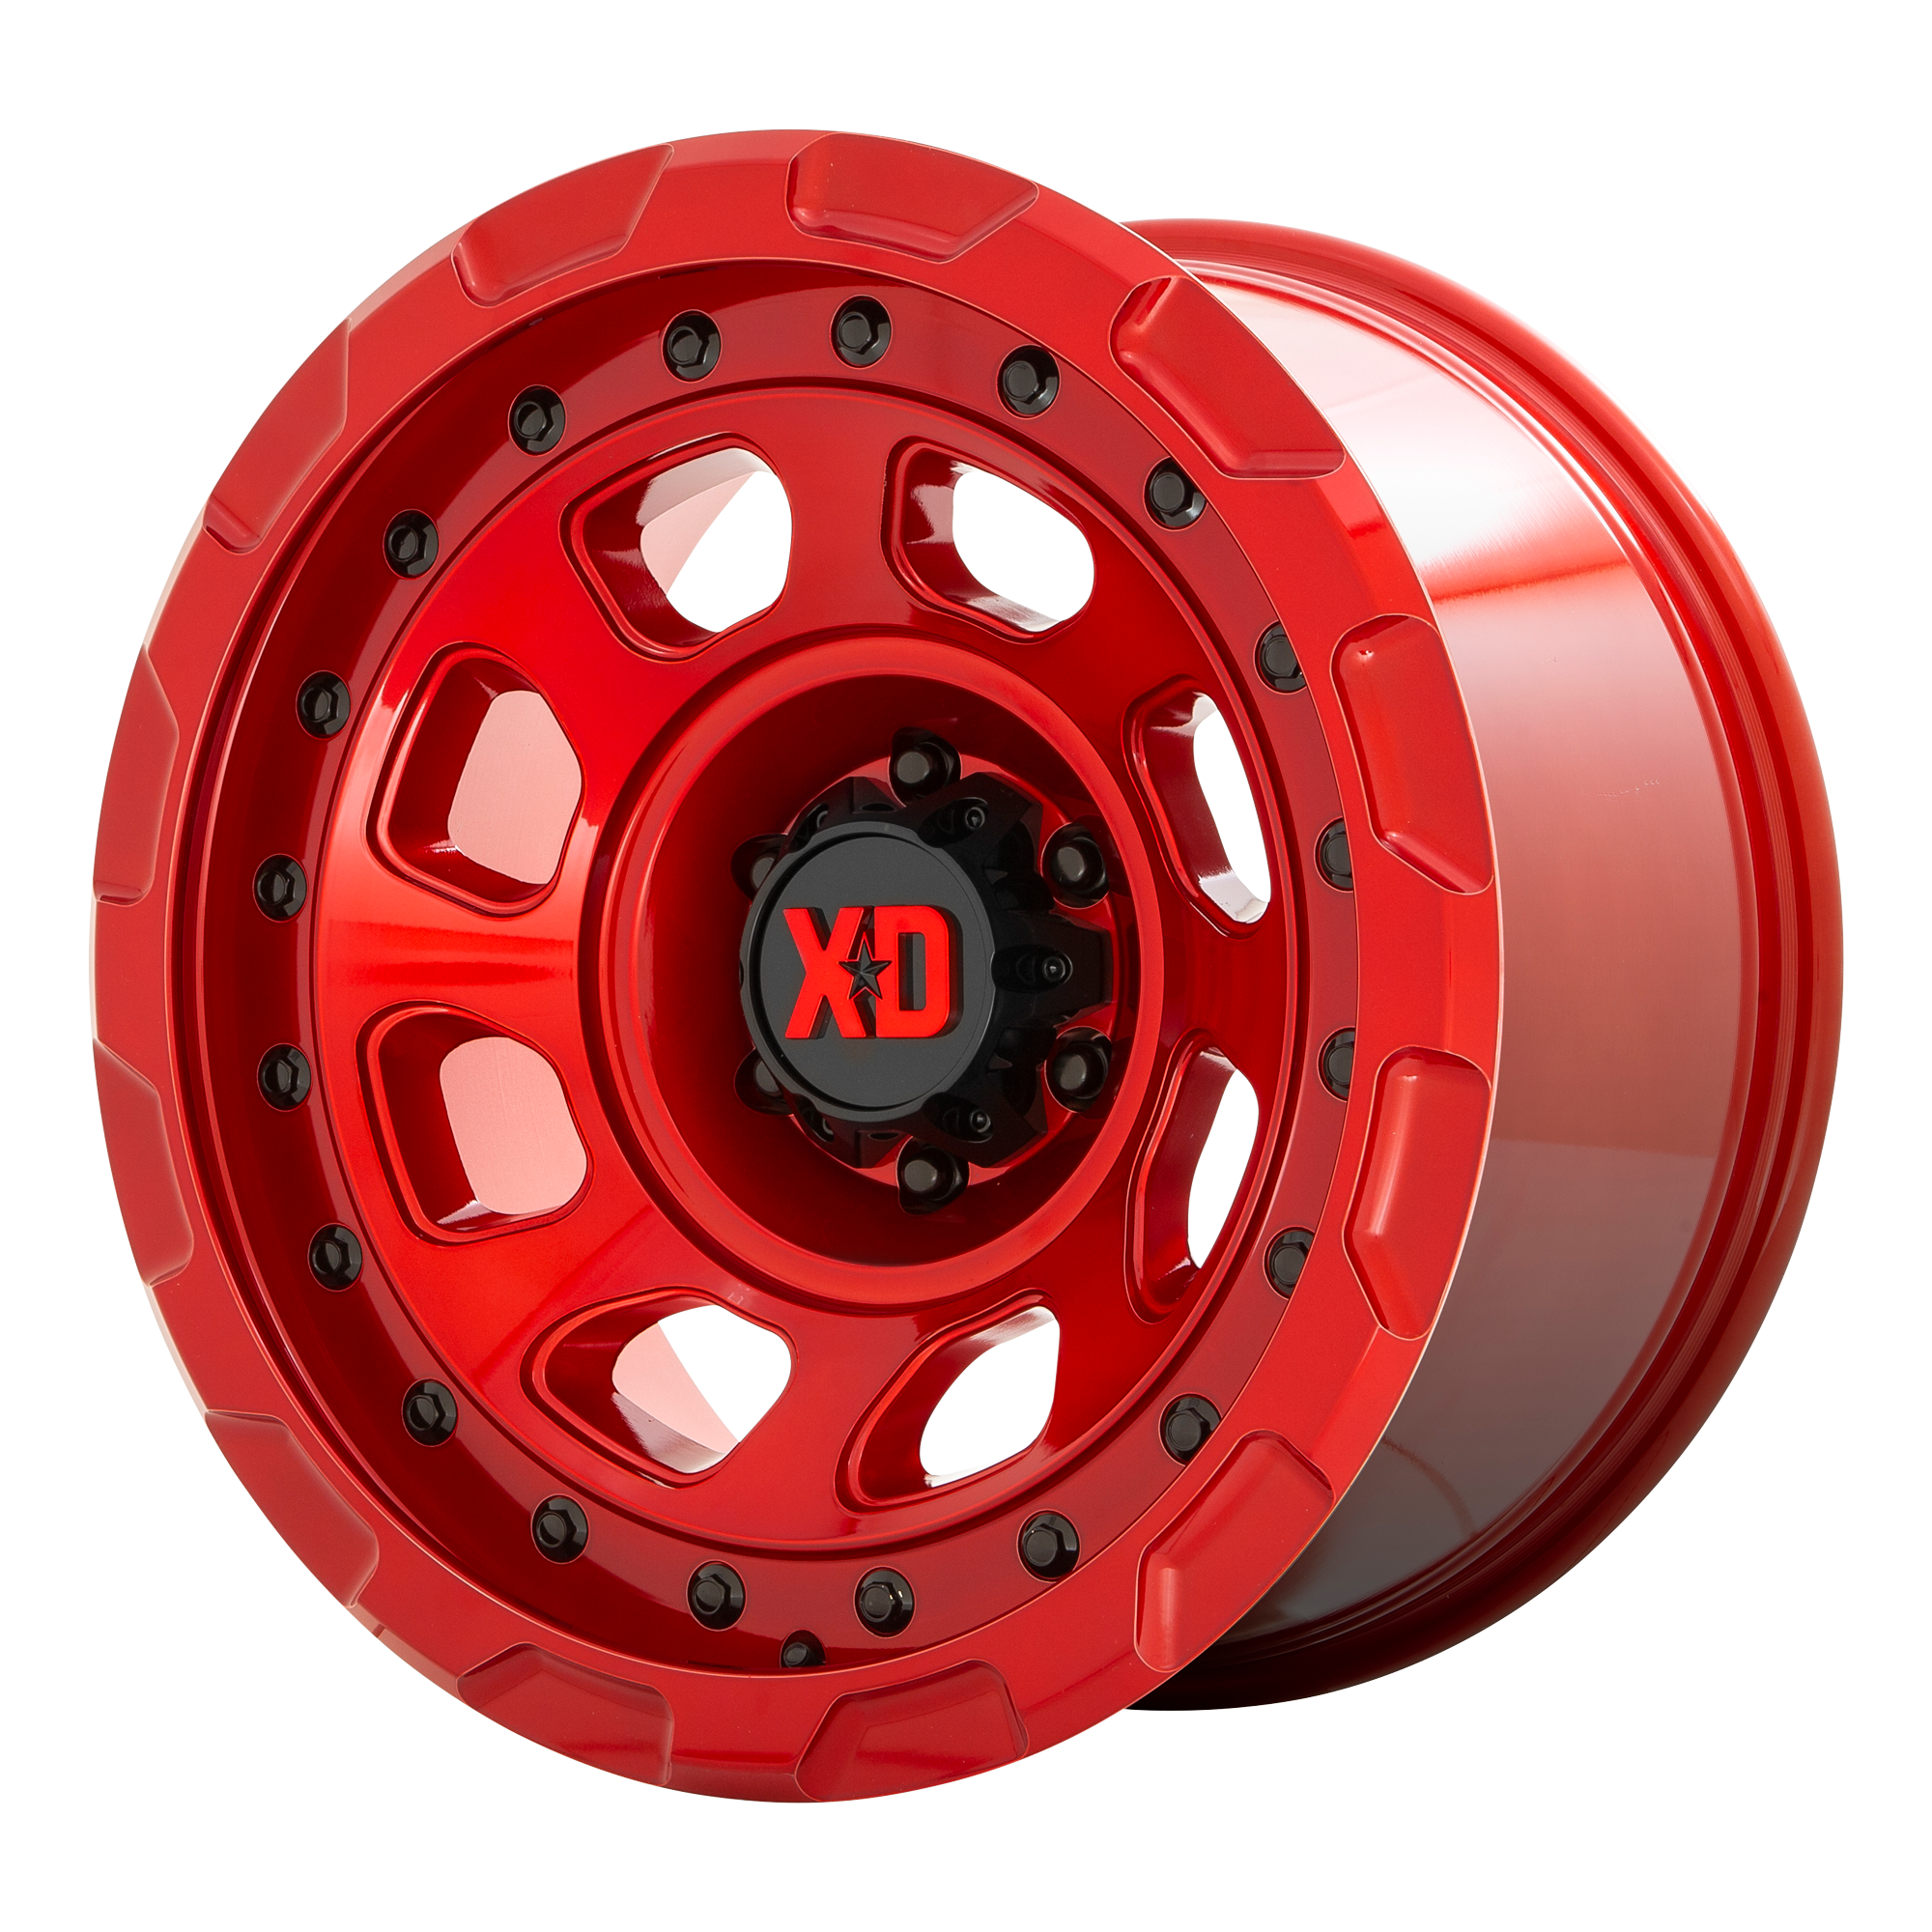 XD 20"x9" Non-Chrome Candy Red Custom Wheel ARSWCWXD86129068918